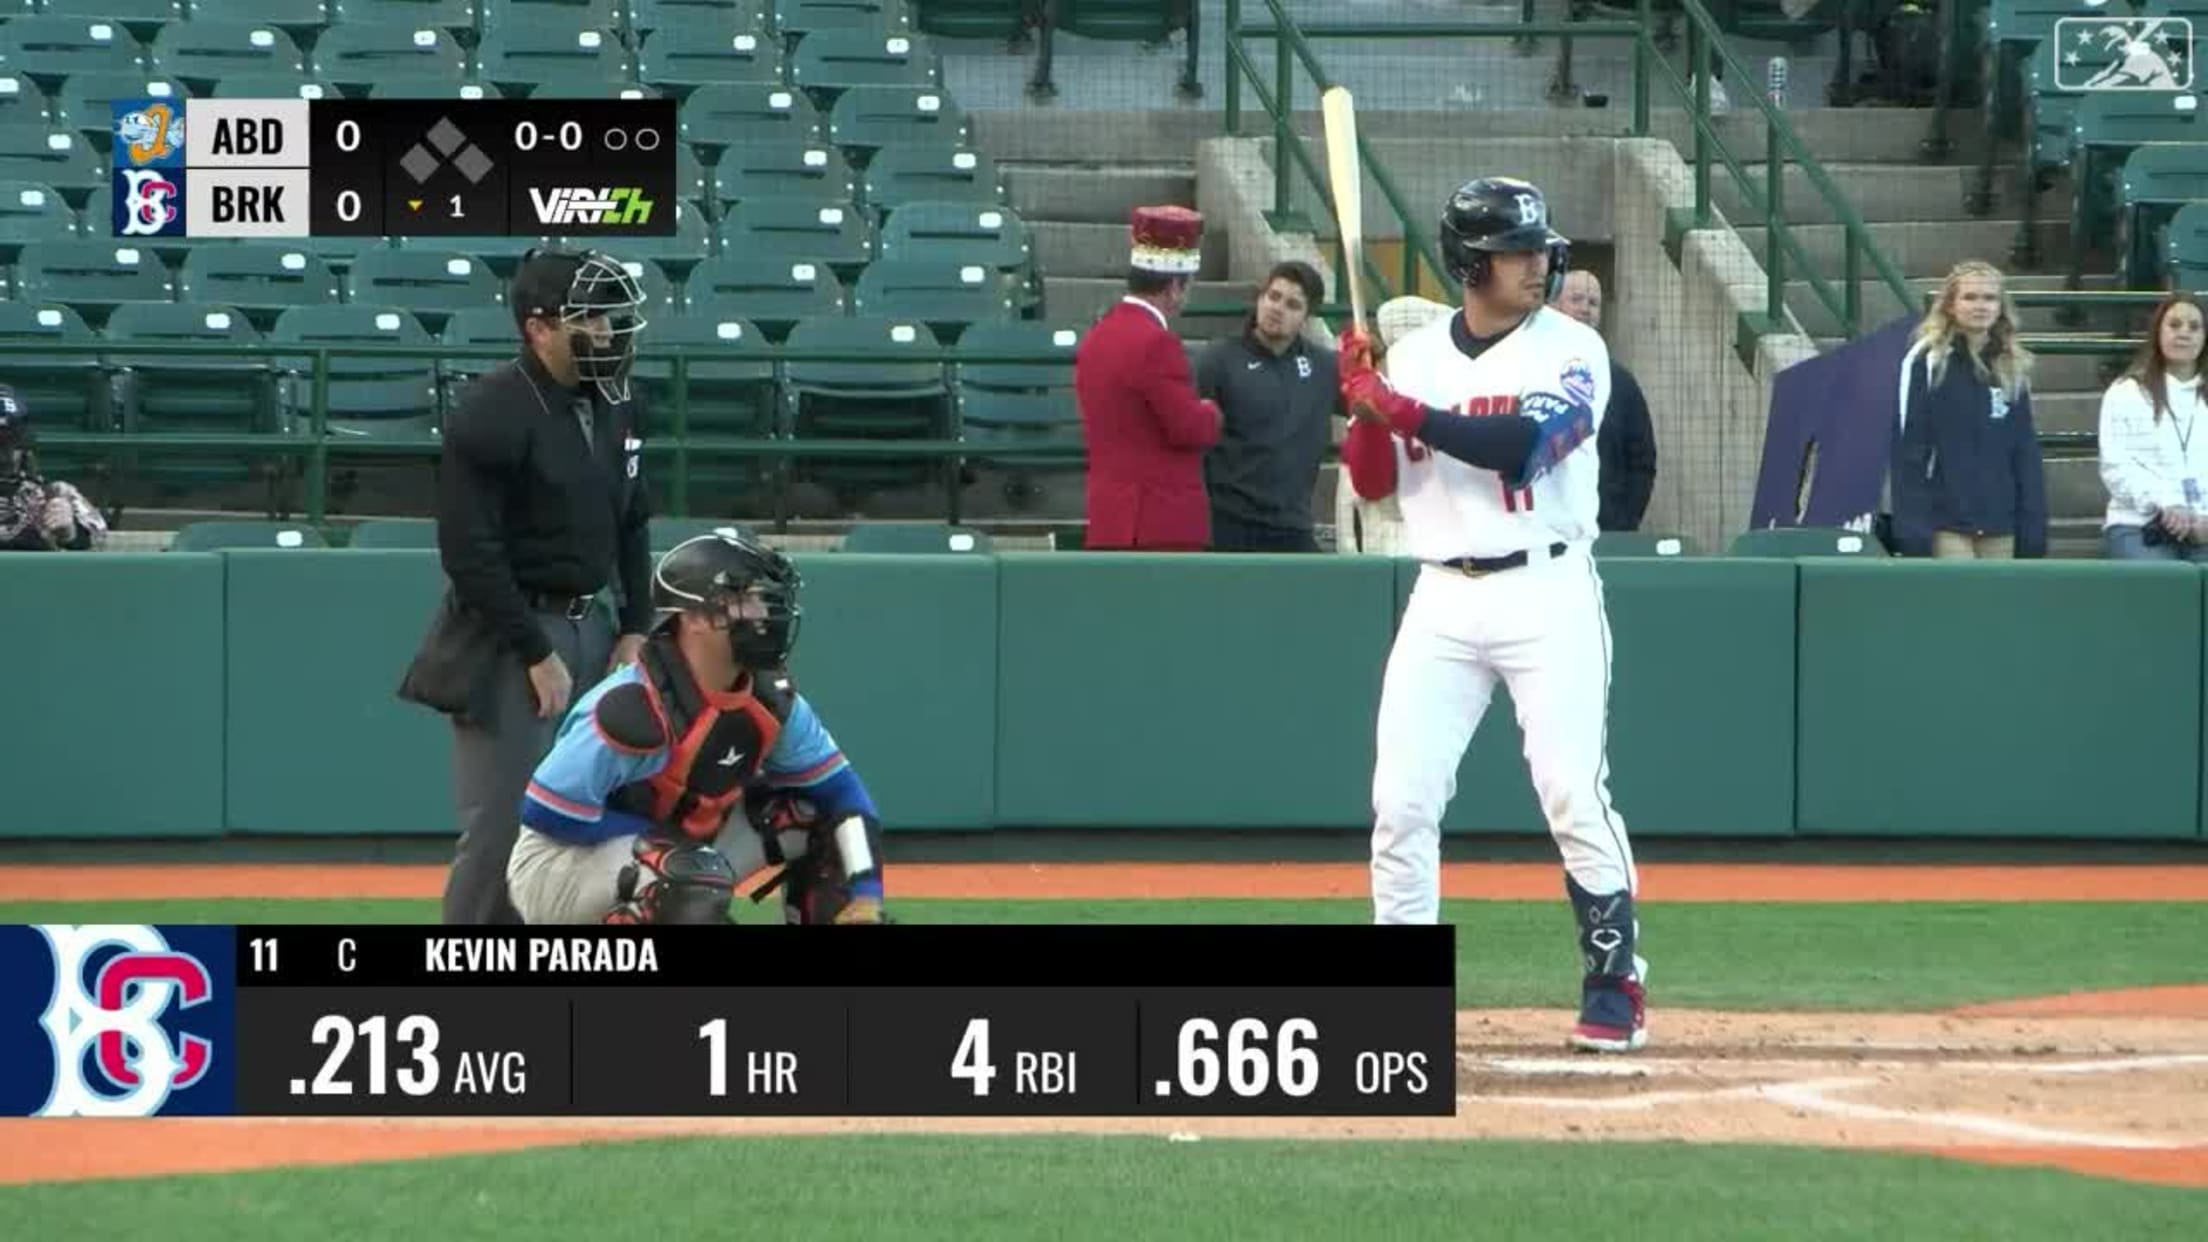 Kevin Parada's three hits